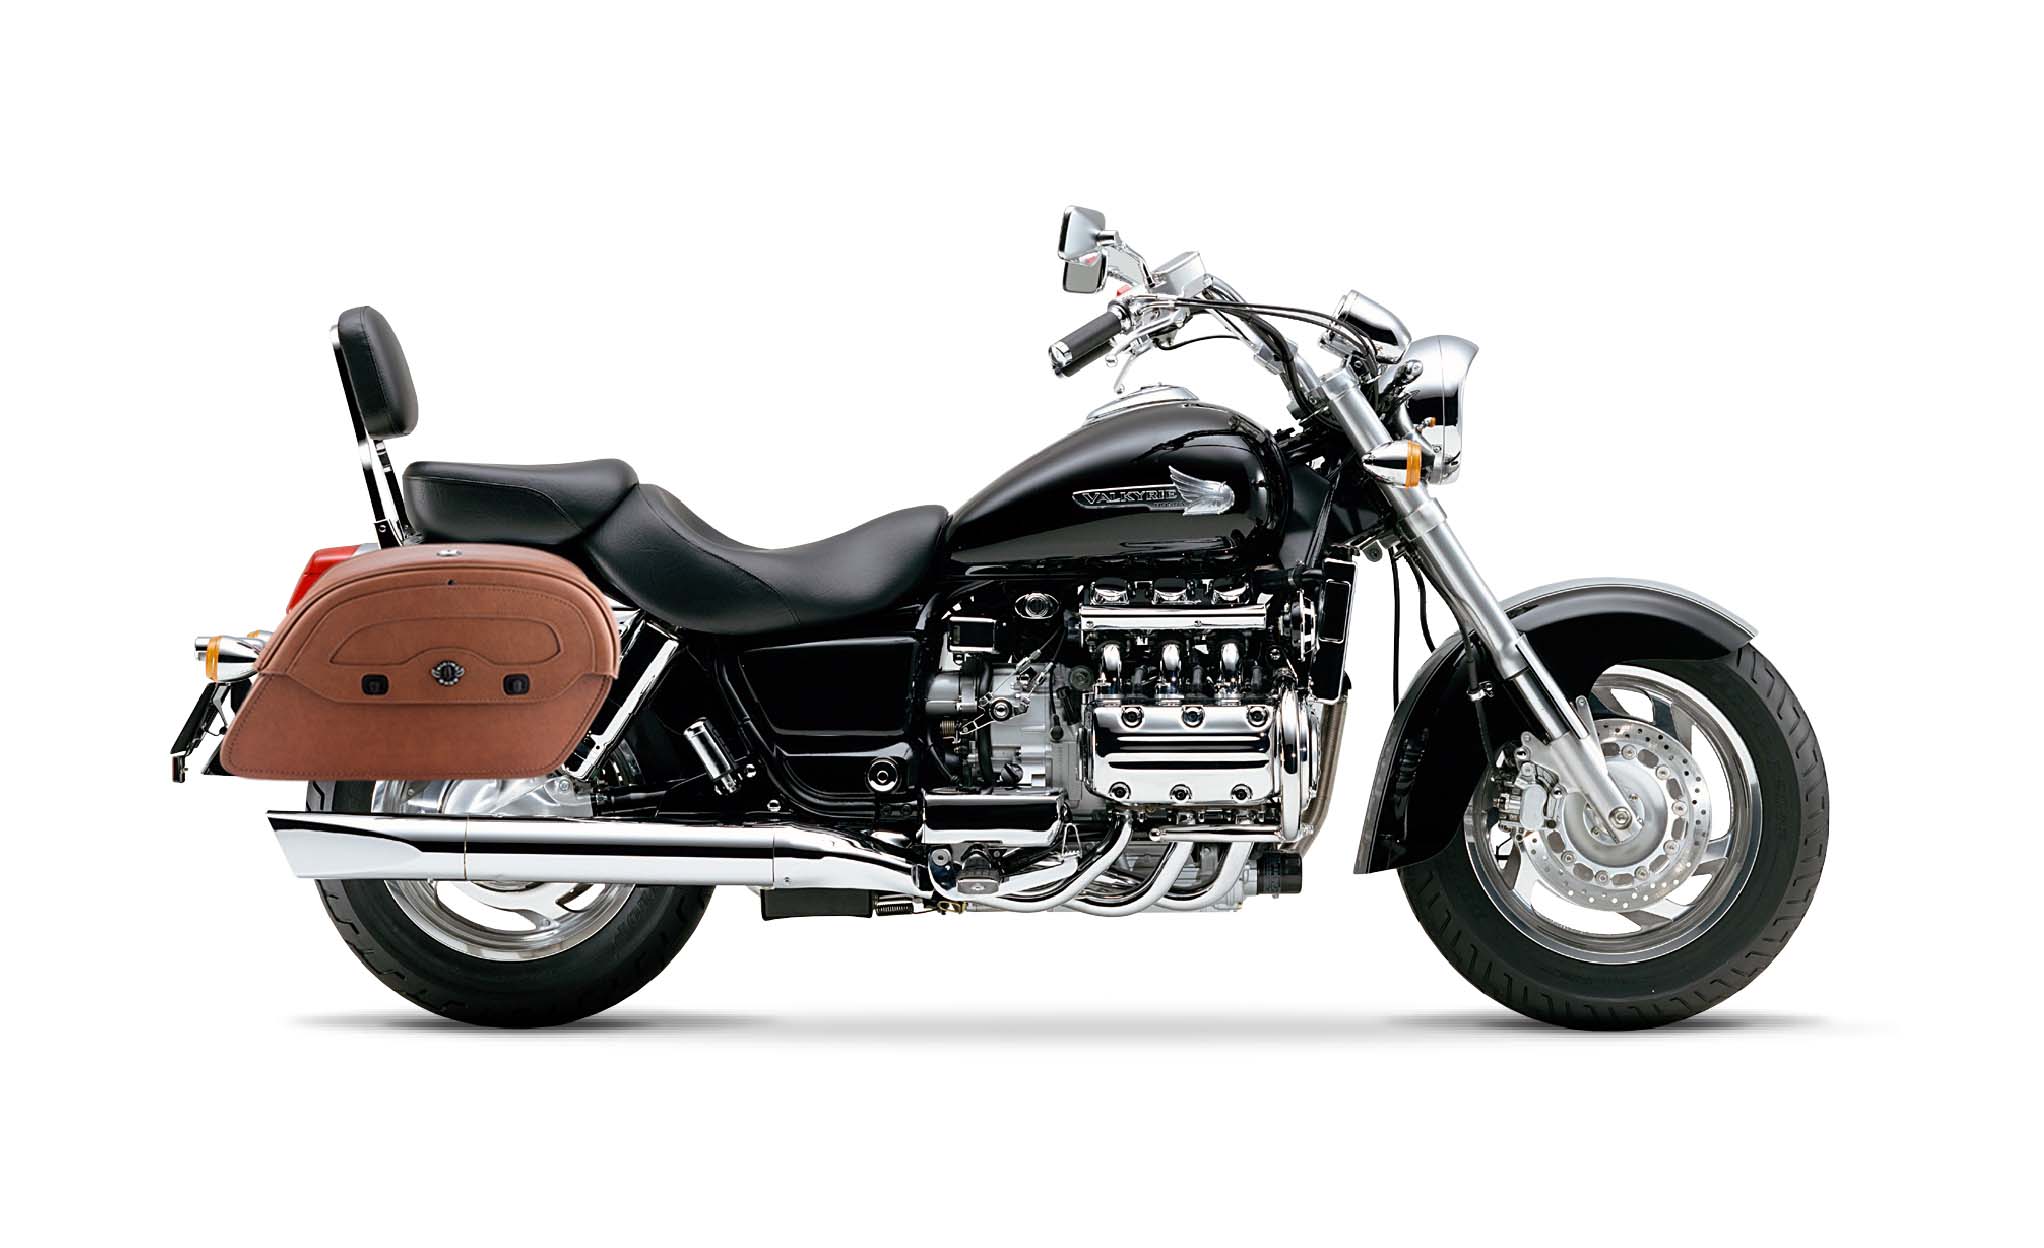 Viking Warrior Brown Large Honda 1500 Valkyrie Standard Leather Motorcycle Saddlebags on Bike Photo @expand